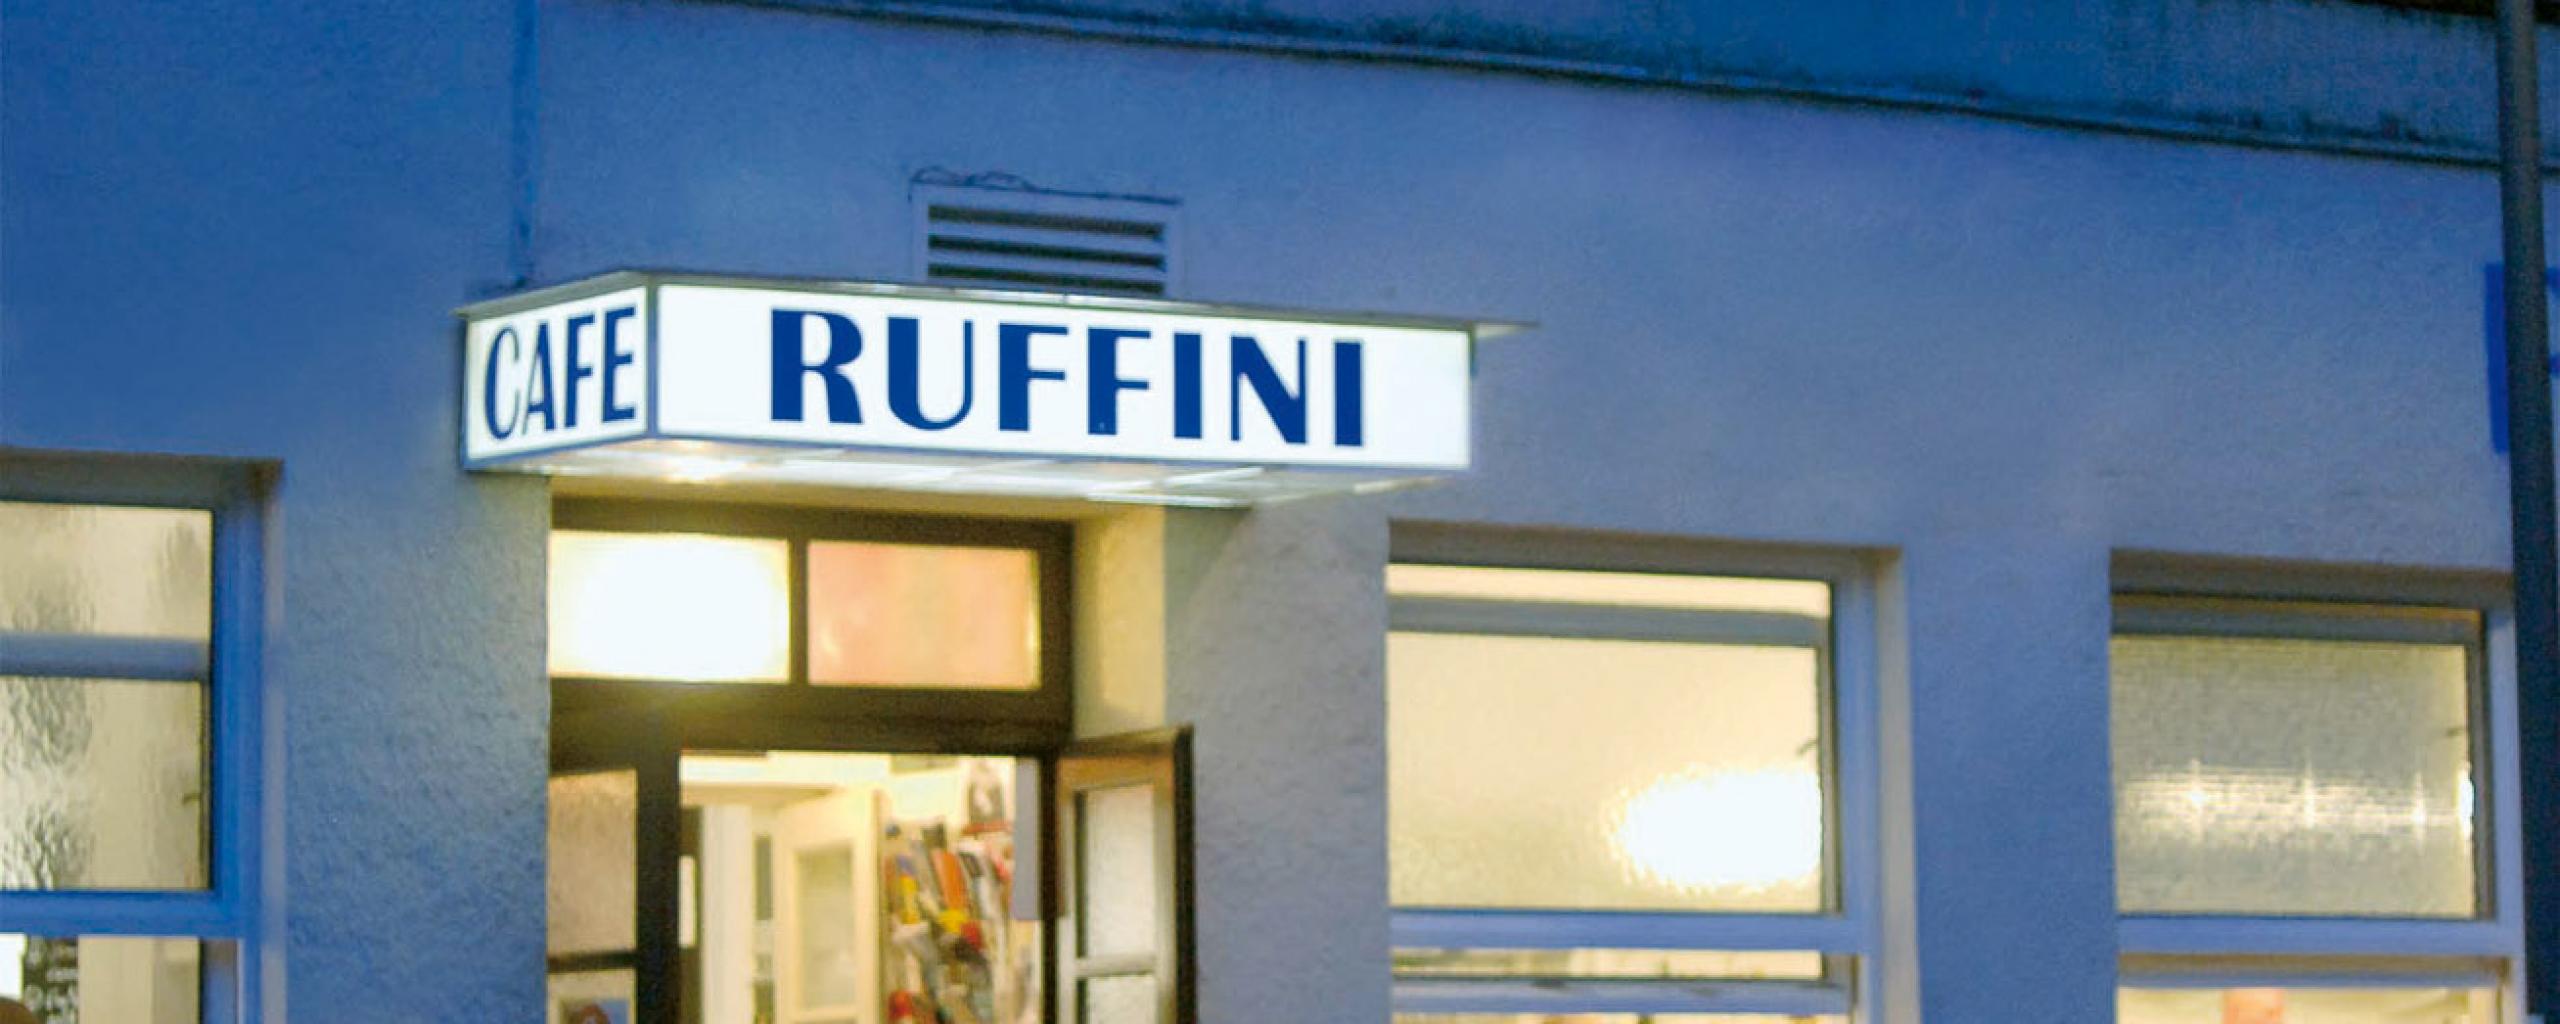 Ruffini